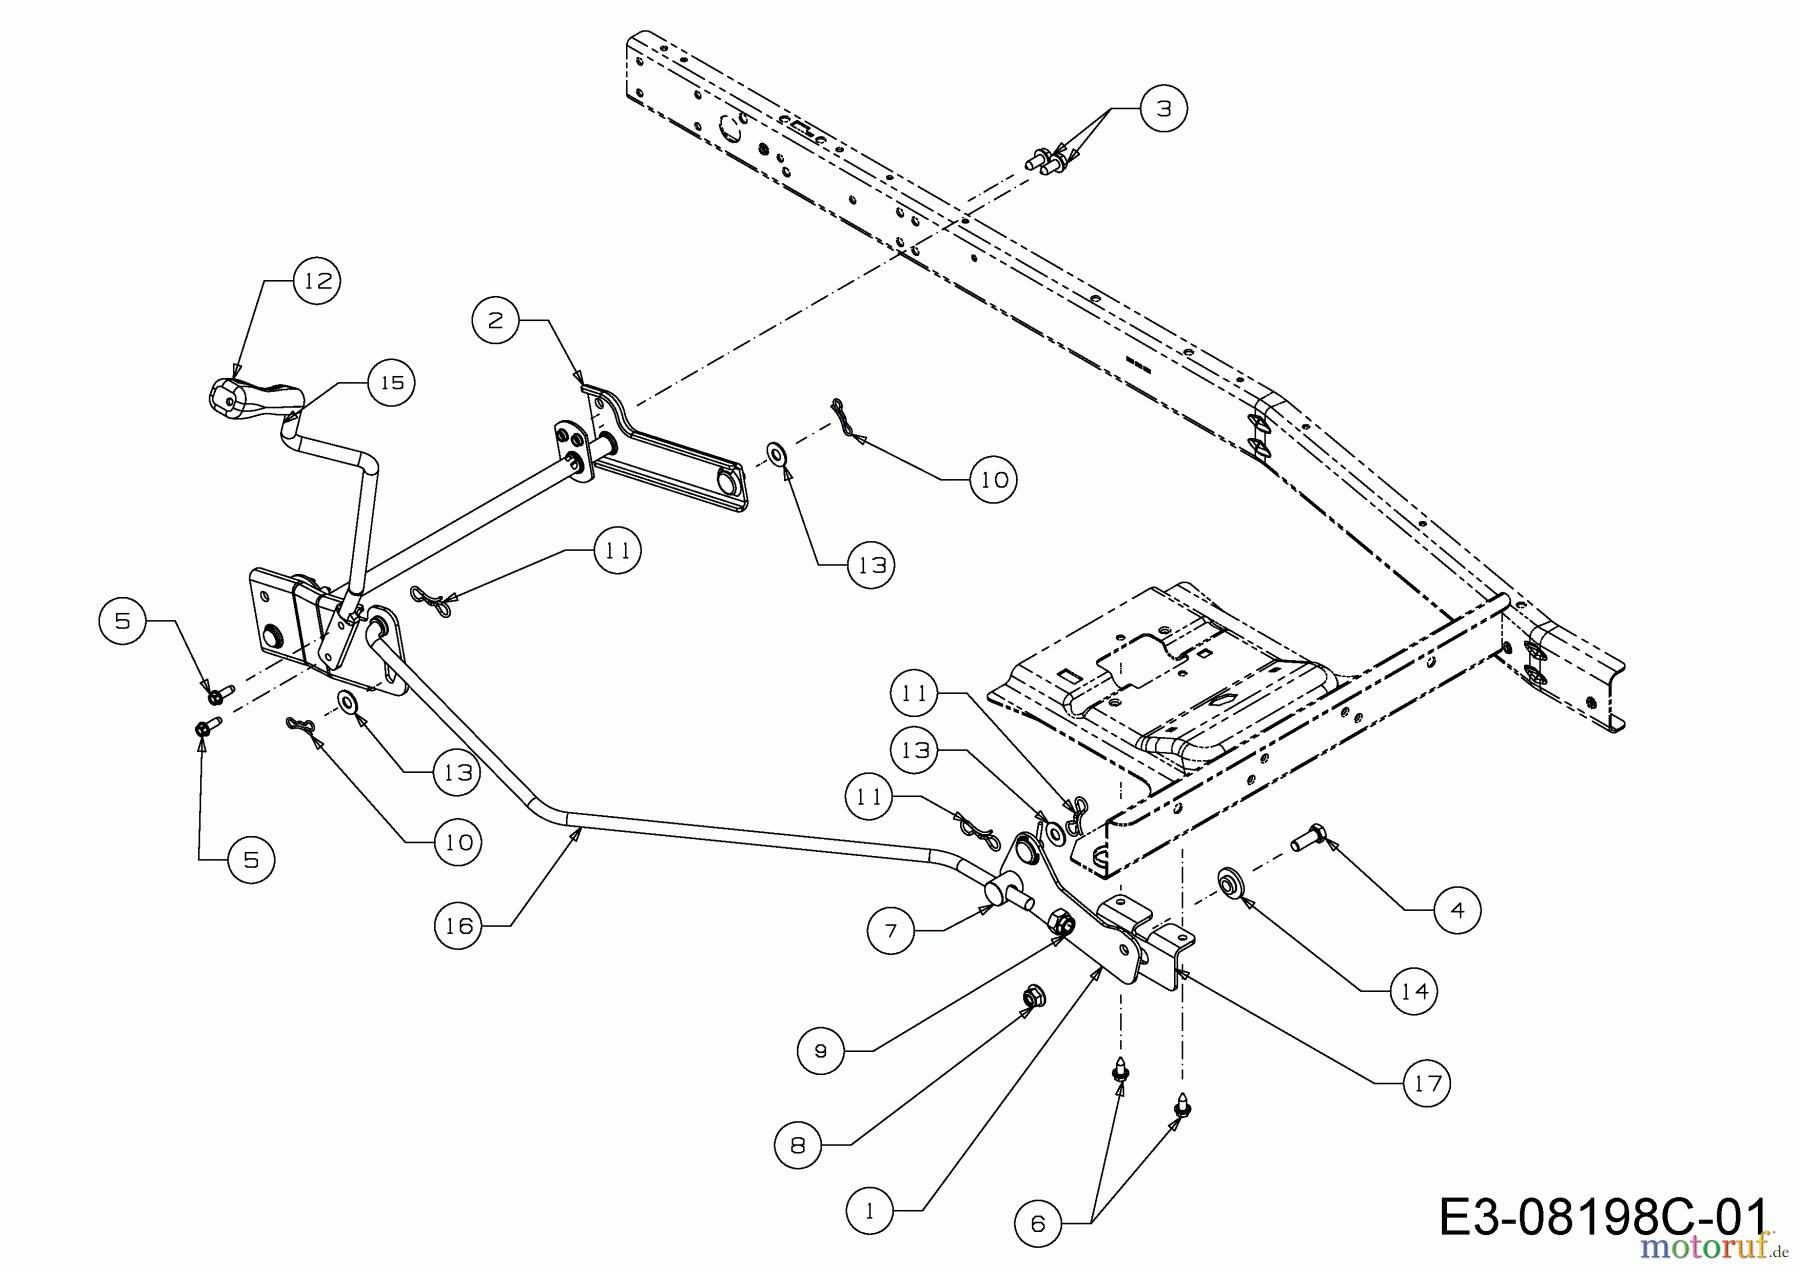  Wolf-Garten Lawn tractors Scooter Mini 13A326SC650  (2017) Deck engagement